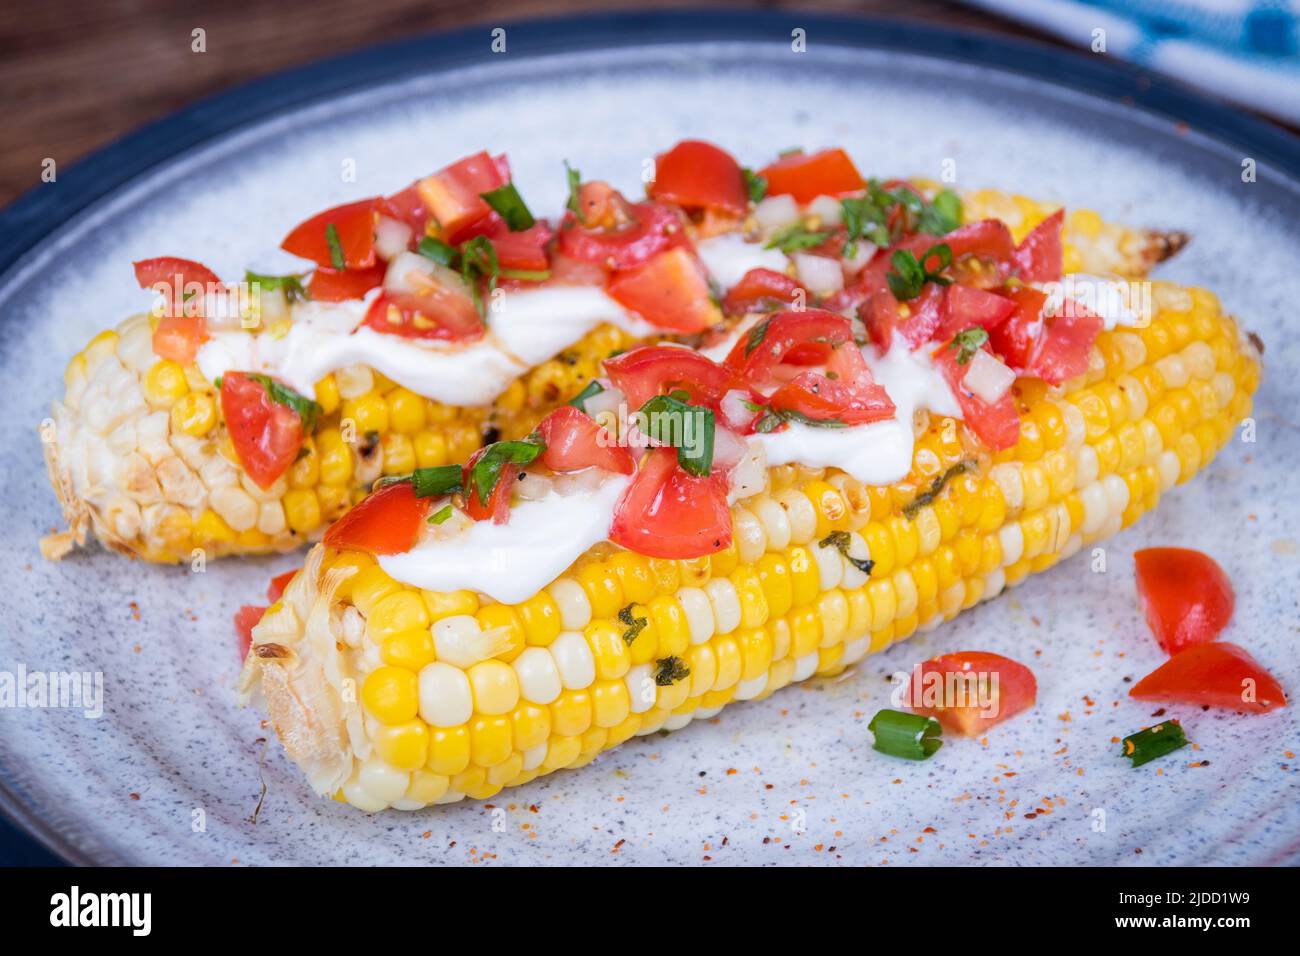 Elote delicious grilled mexican corn with cream cheese and pico de gallo salsa Stock Photo